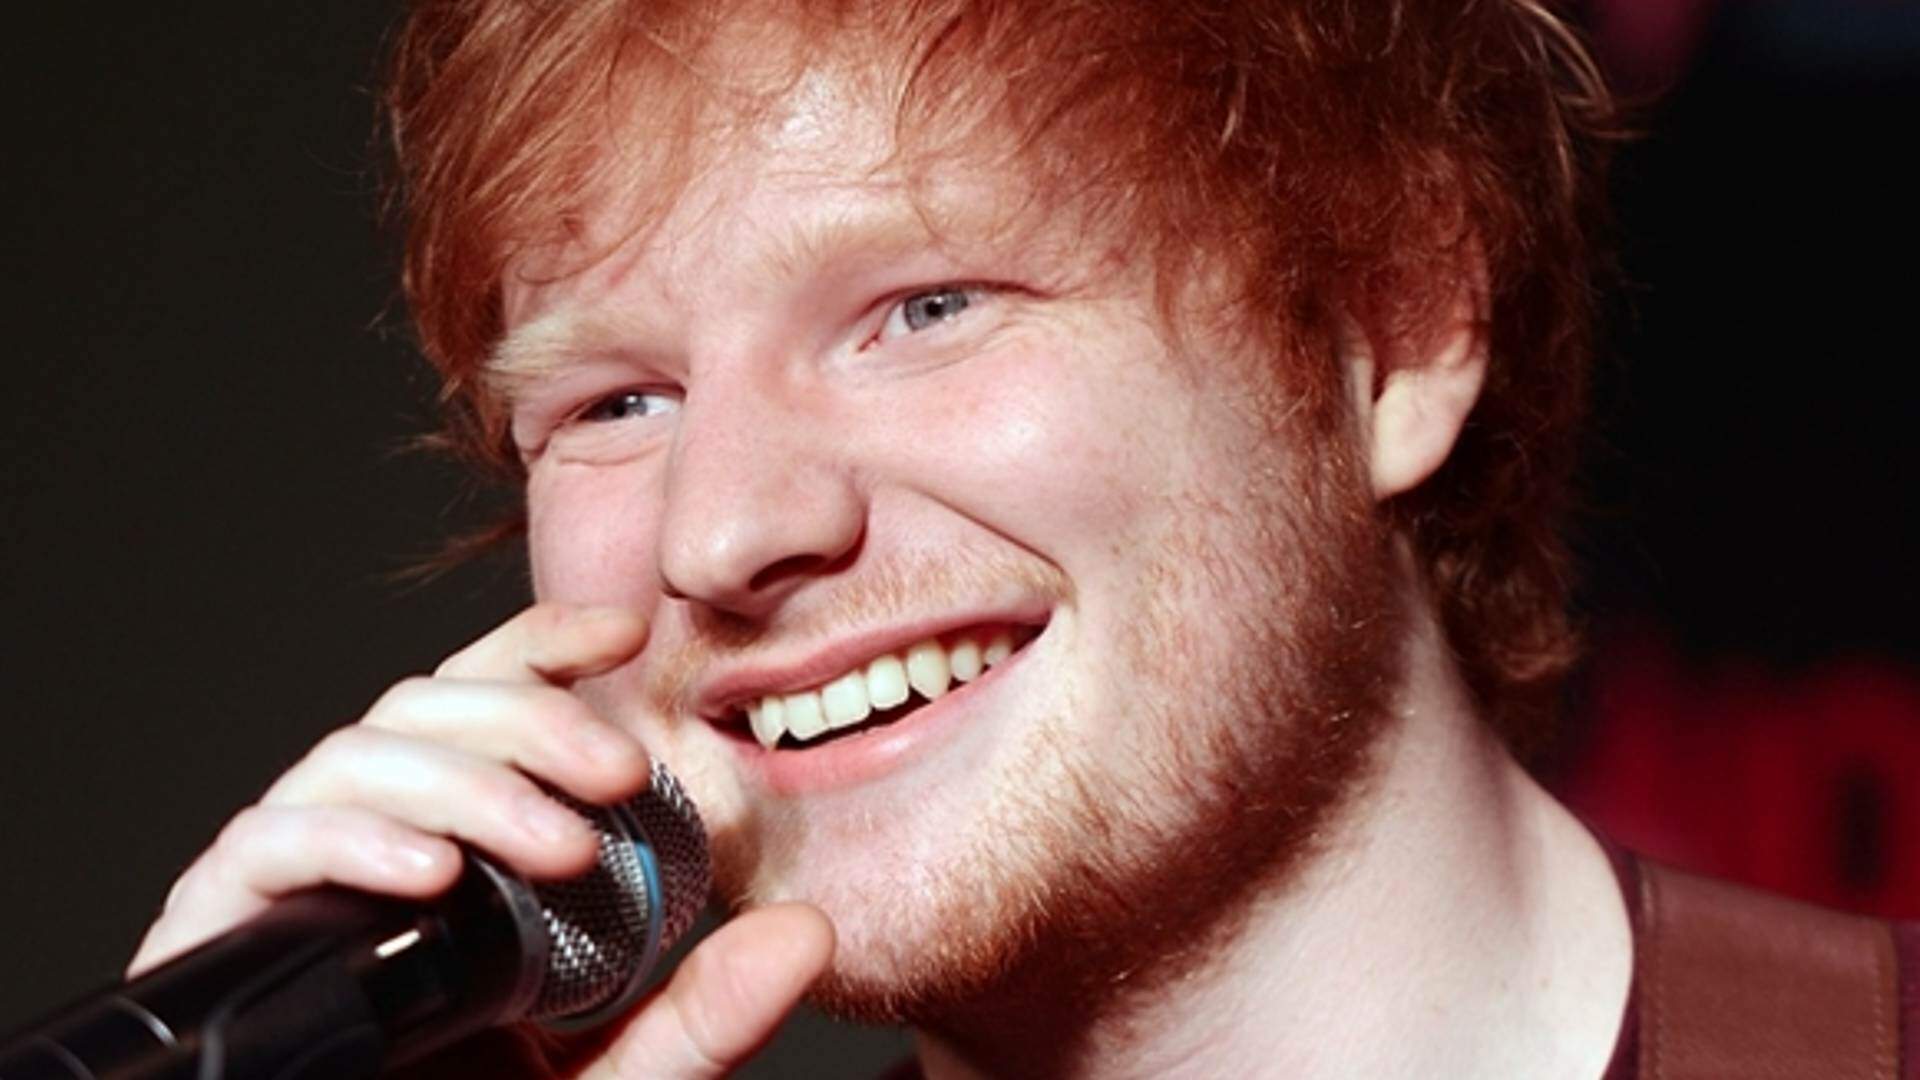 Abandonou a carreira artística? Ed Sheeran pega fãs de surpresa ao surgir ‘trabalhando’ em local inusitado e viraliza